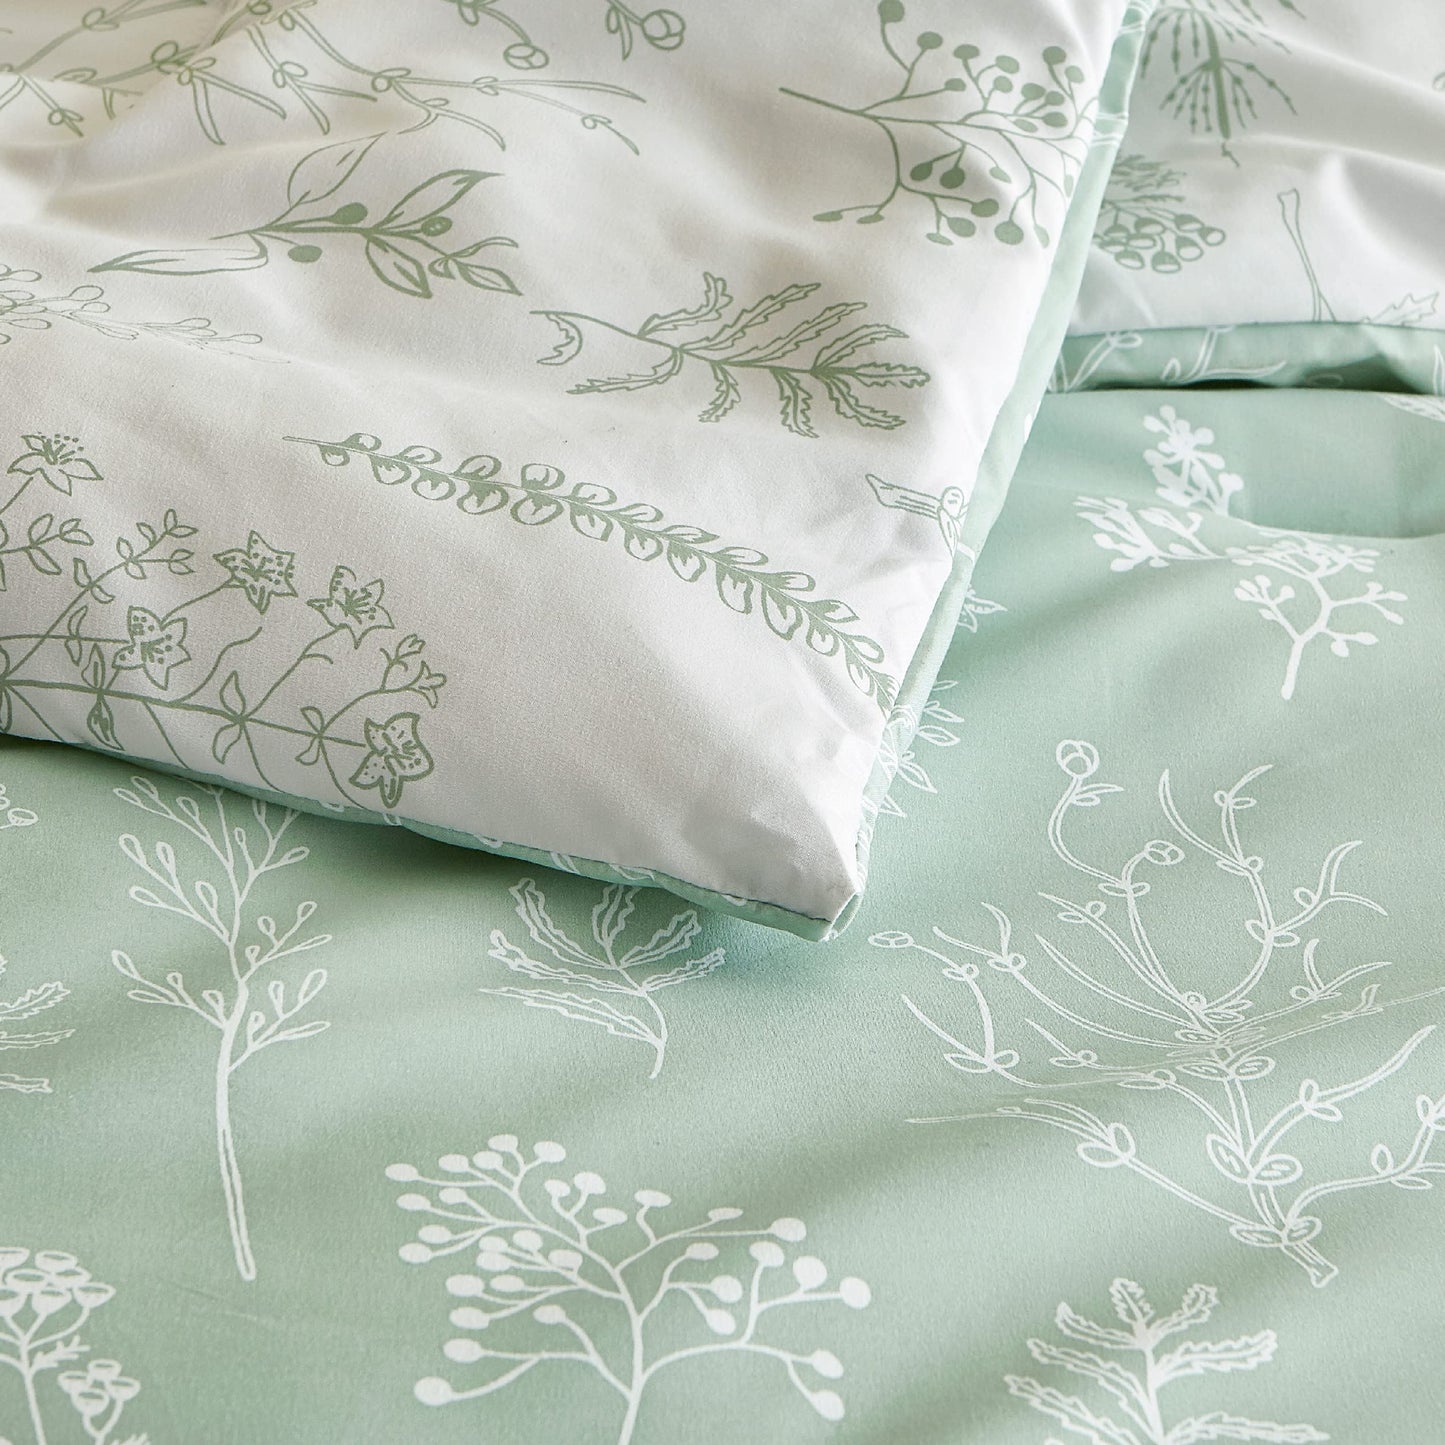 Bedsure Queen Comforter Set - Sage Green Comforter, Cute Floral Bedding Comforter Sets, 3 Pieces, 1 Soft Reversible Botanical Flowers Comforter and 2 Pillow Shams